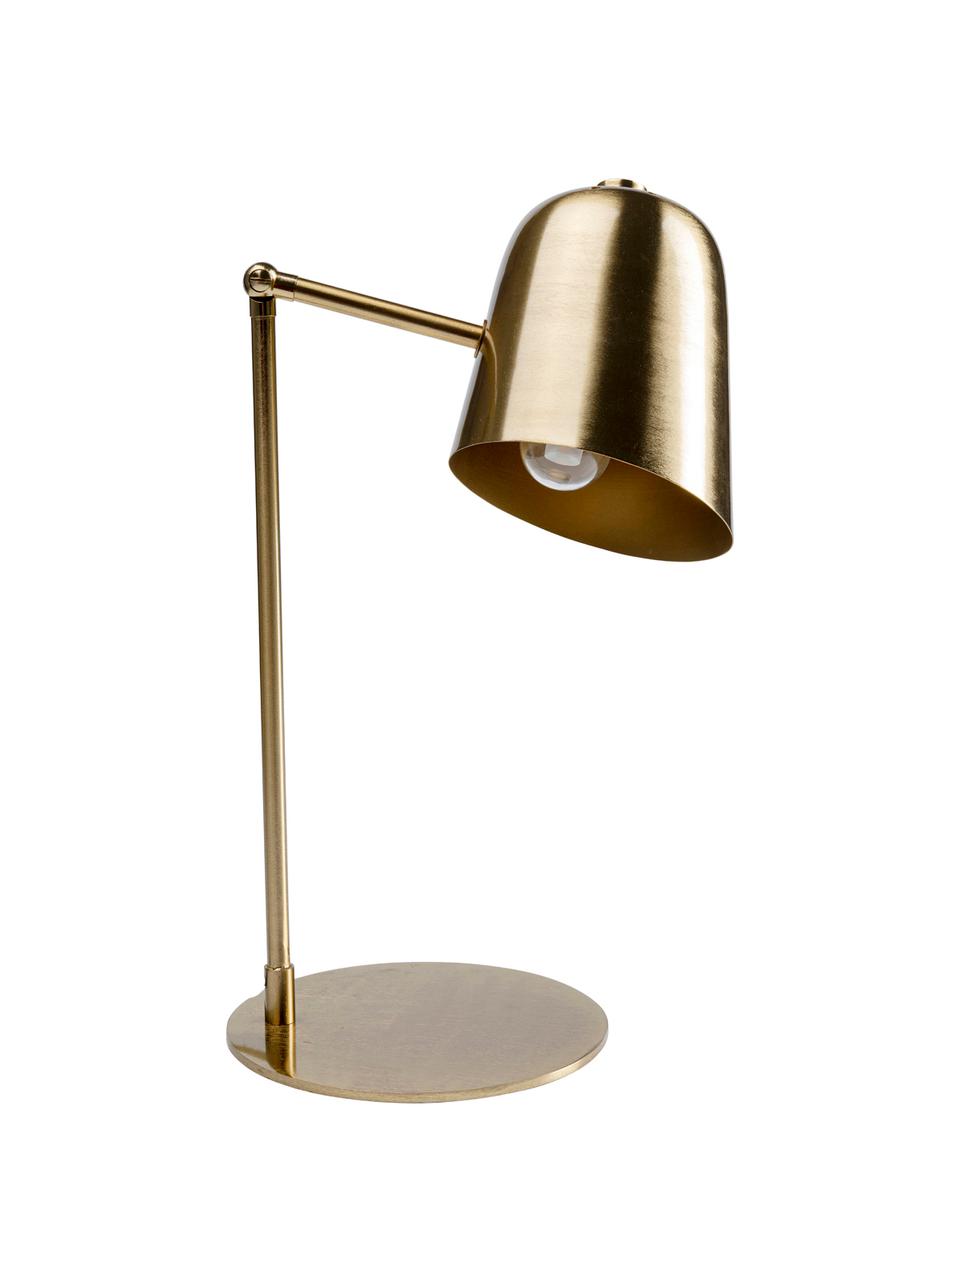 Grote design bureaulamp Clive, Lampenkap: vermessingd staal, Lampvoet: vermessingd staal, Messingkleurig, 27 x 56 cm